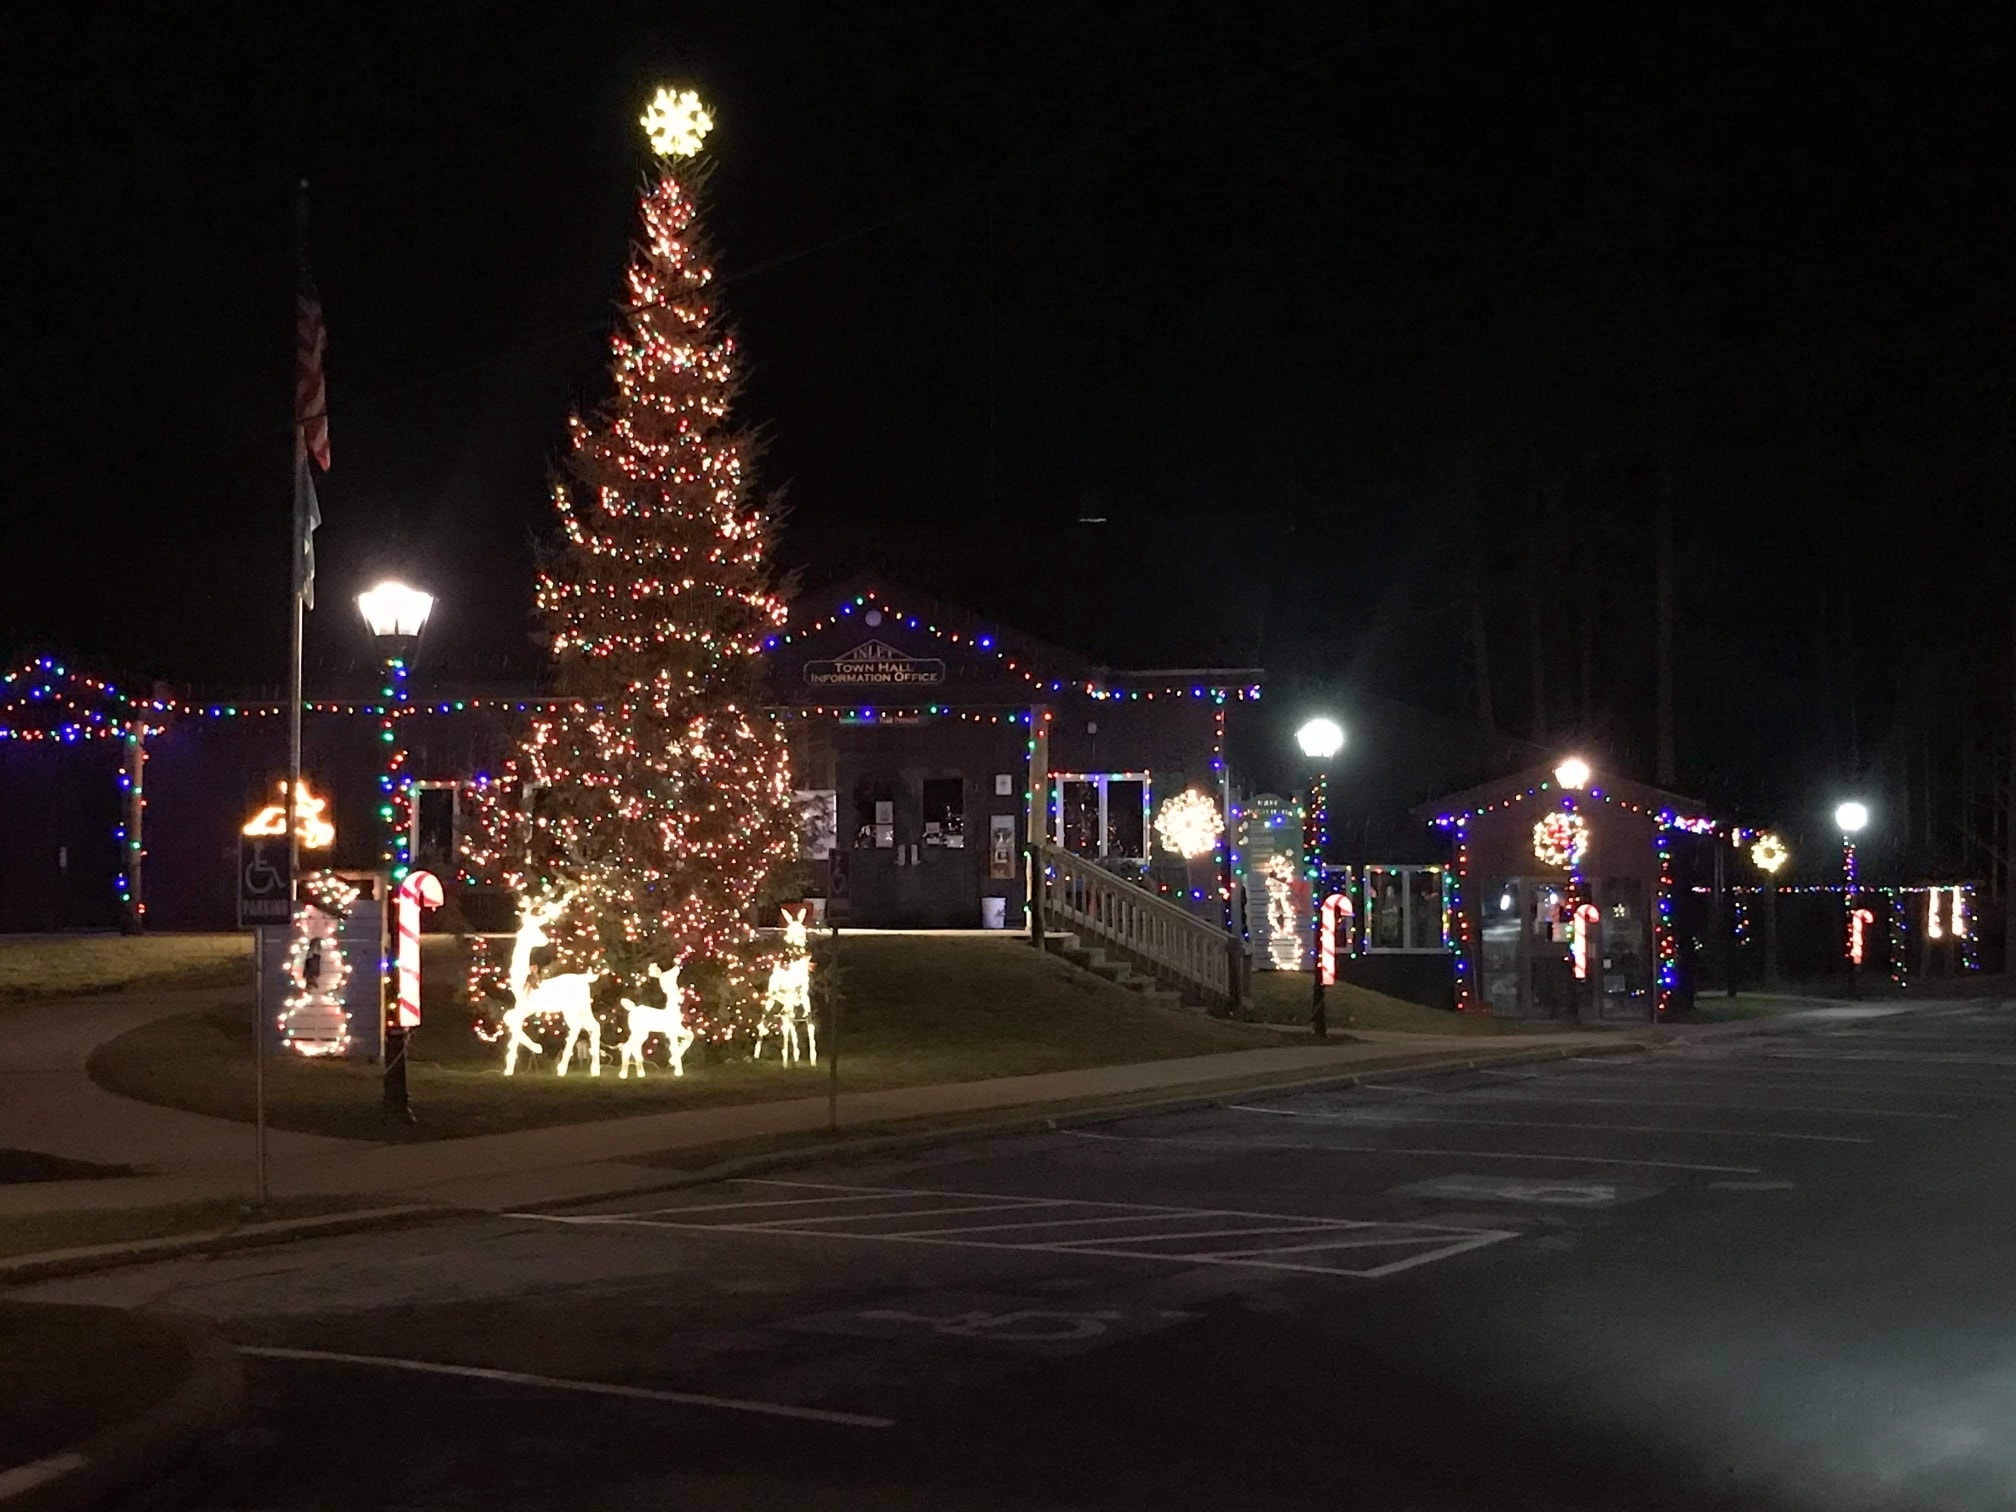 New York kicks off festive season with lighting of tree